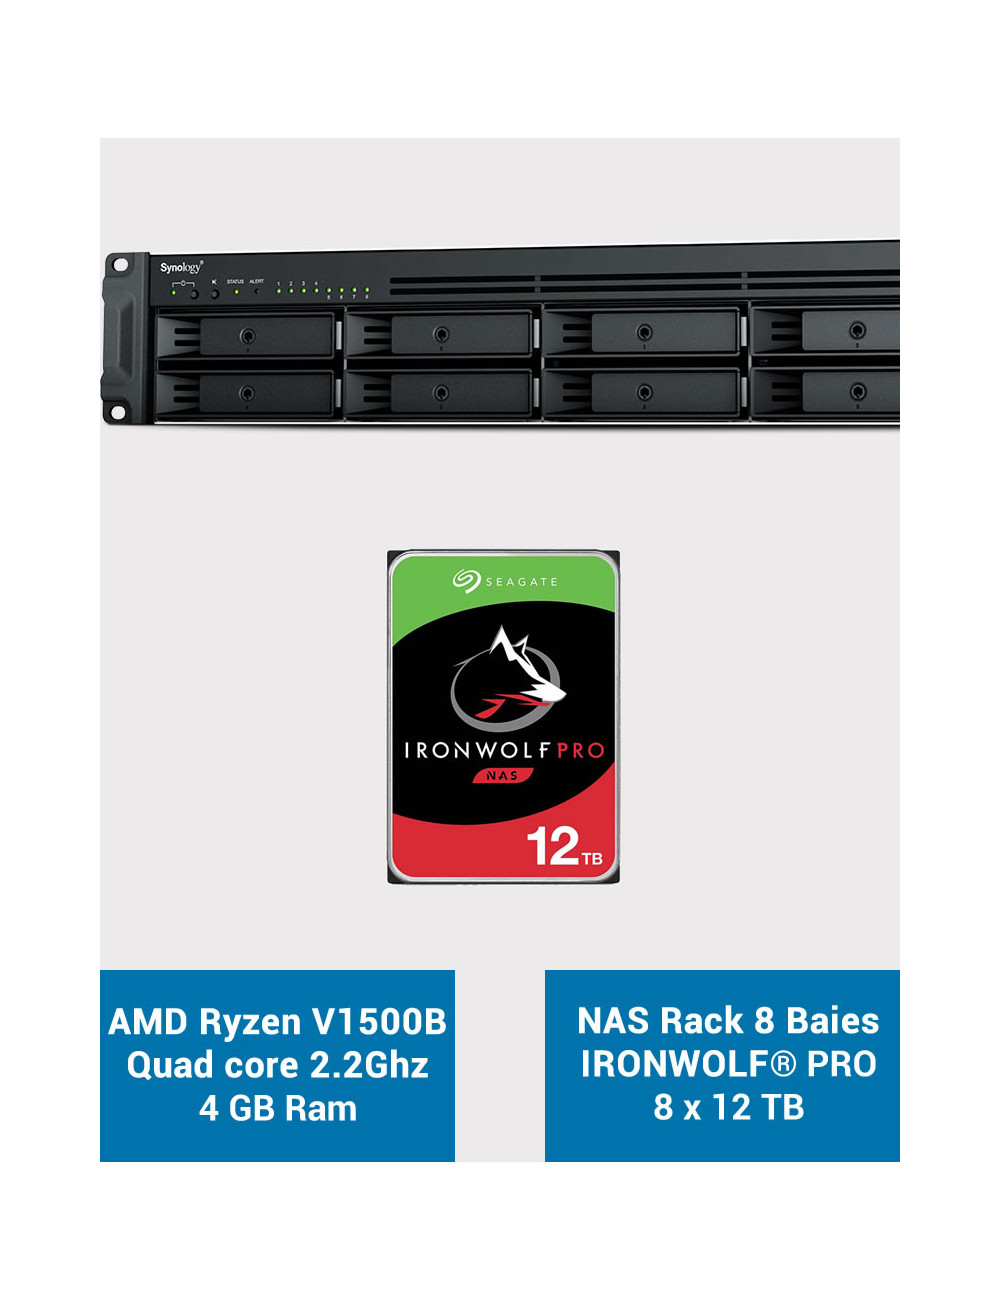 Synology RS1221+ NAS Rack Server IRONWOLF PRO 96TB (8x12TB)